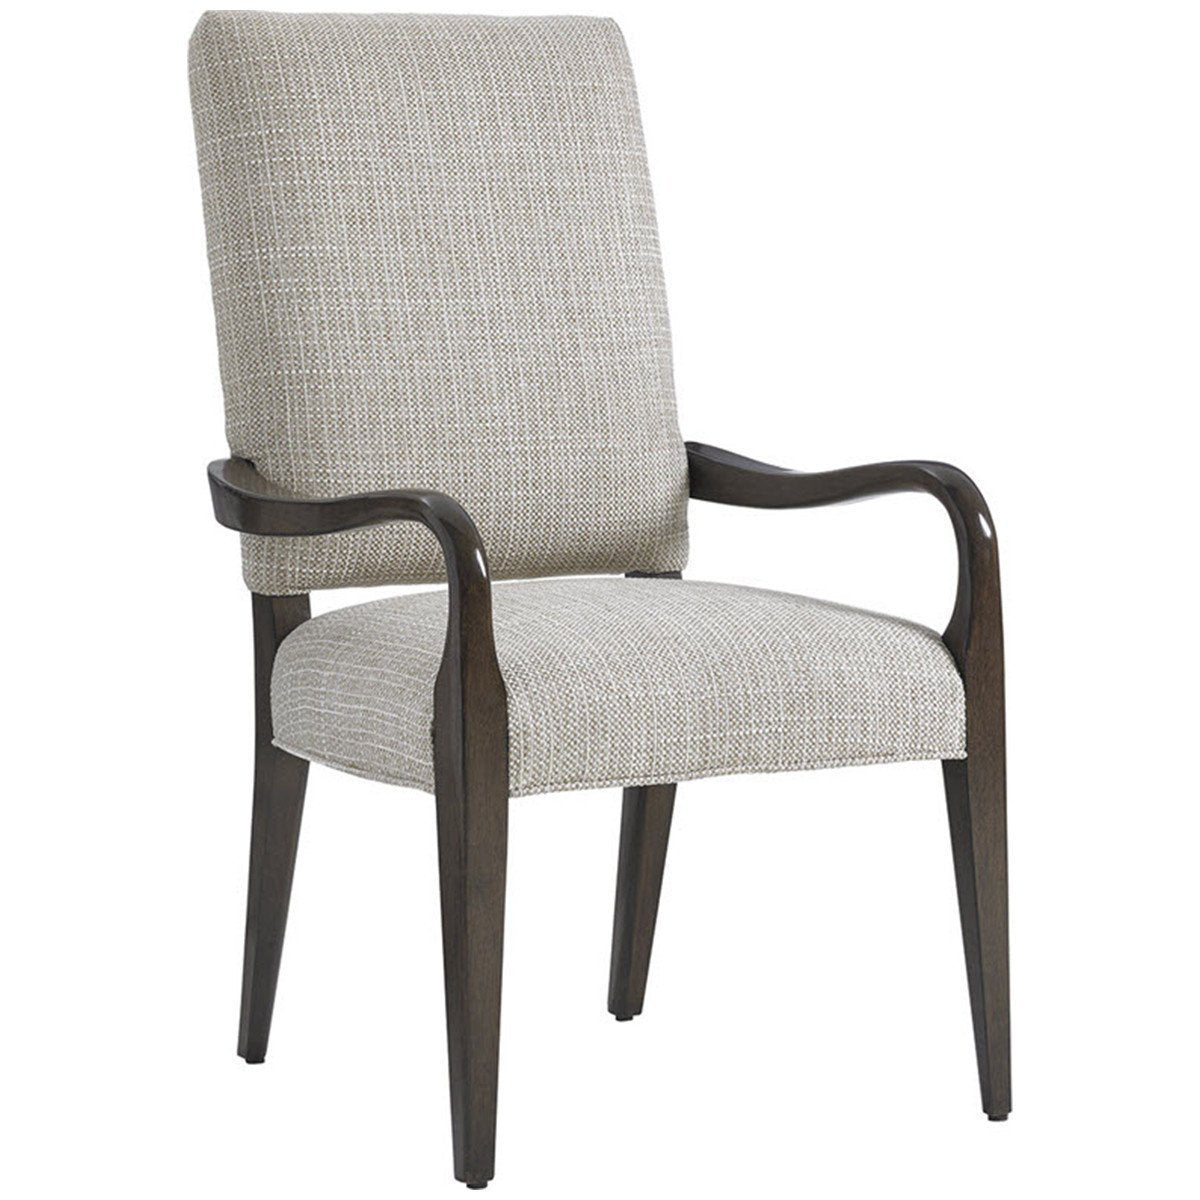 Lexington Laurel Canyon Sierra Upholstered Arm Chair